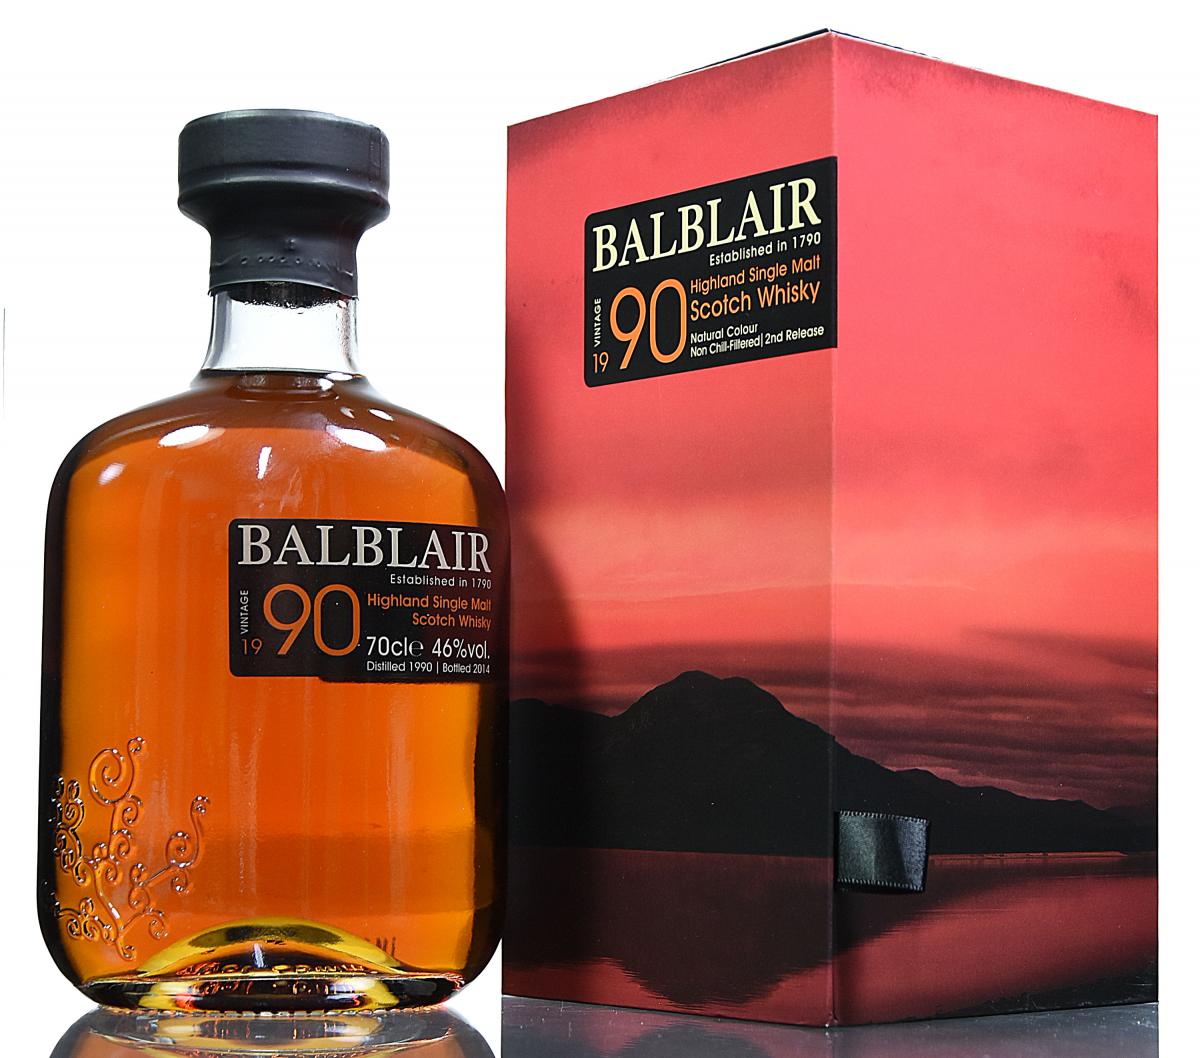 Balblair 1990-2014 - 2nd Release